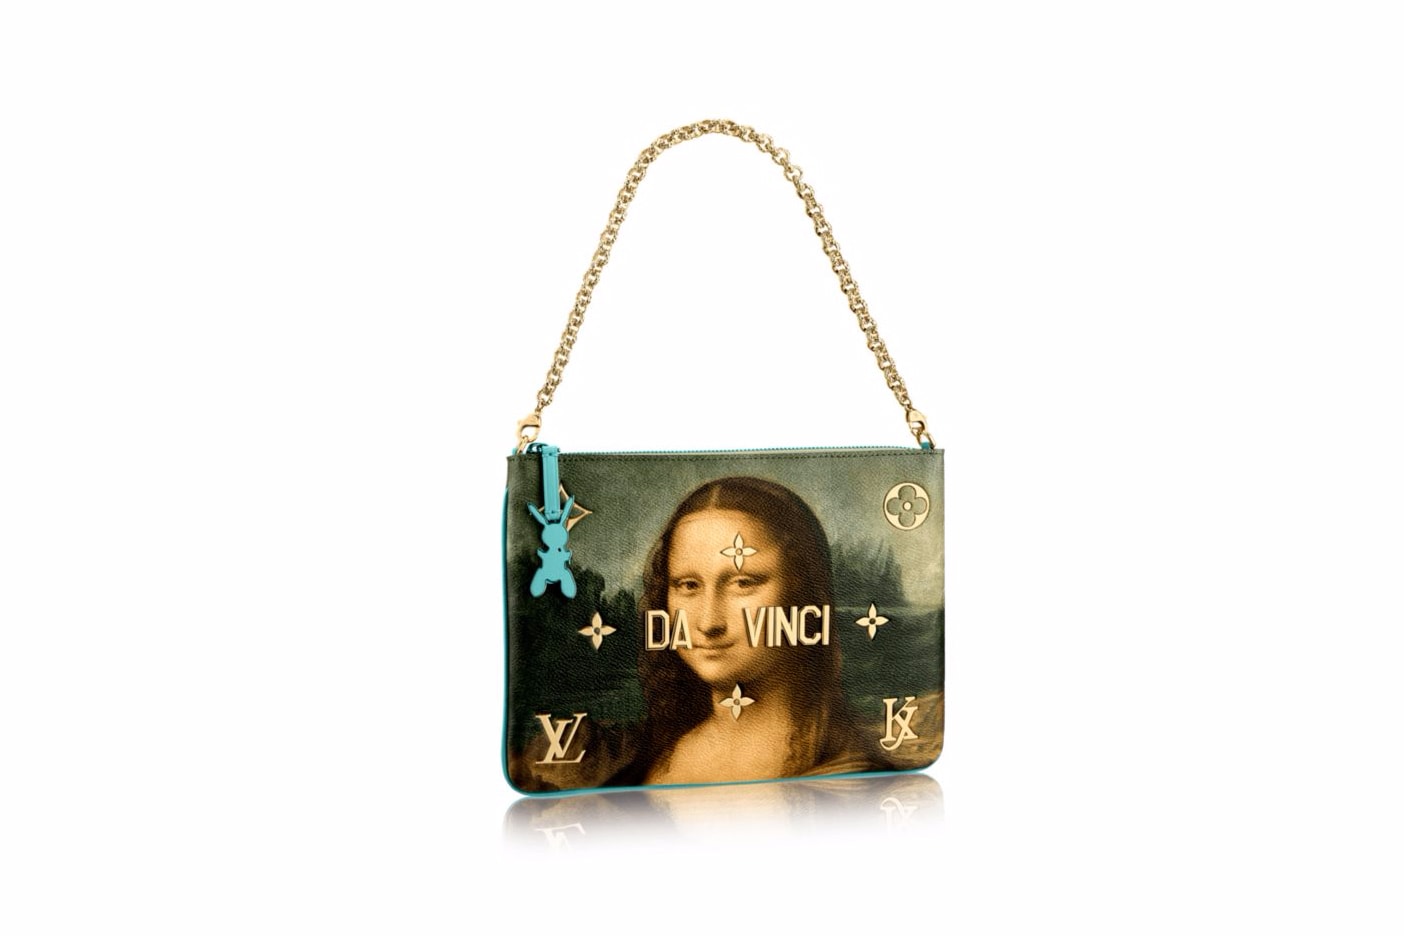 Louis Vuitton collaborates with Pop Artist Jeff Koons on Handbag